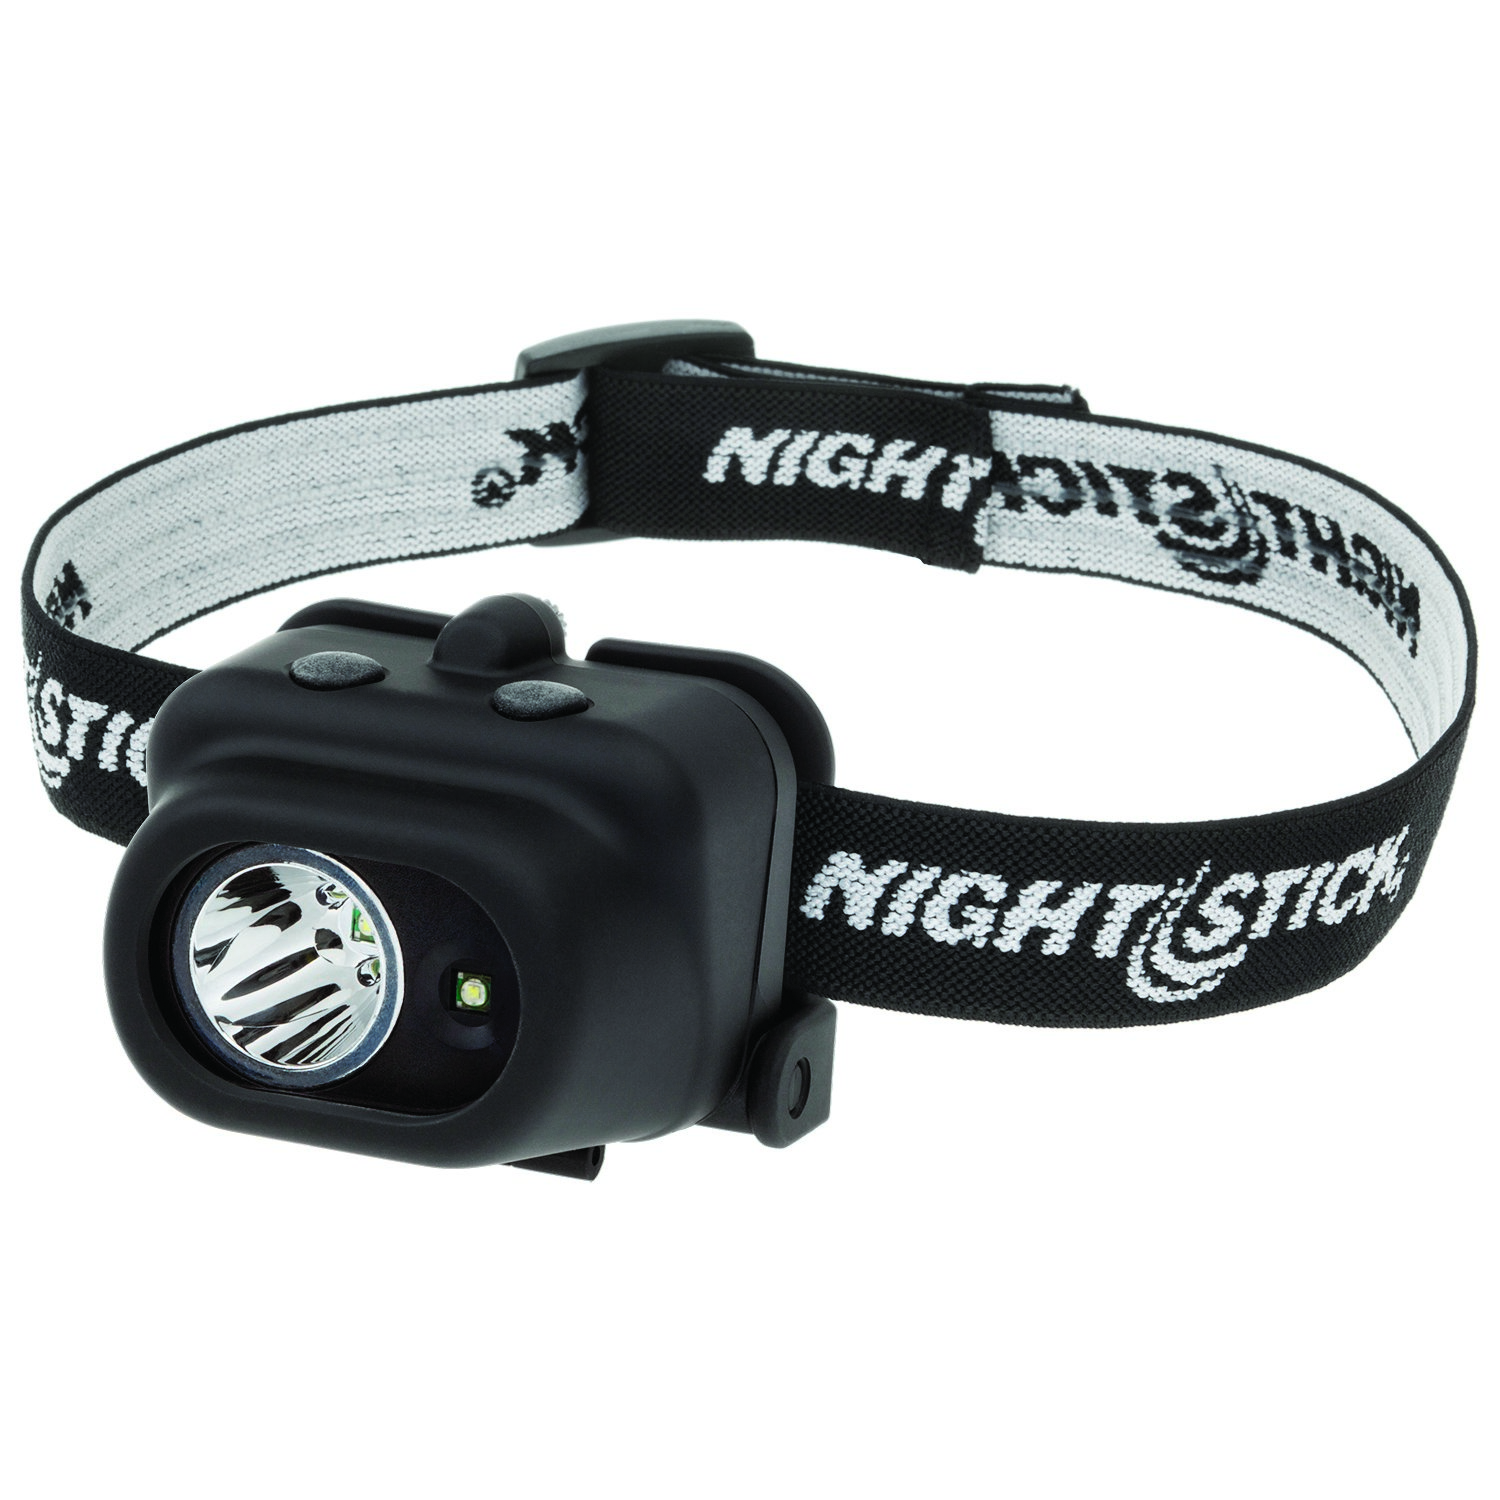 Nightstick Multi-Function LED Headlamp